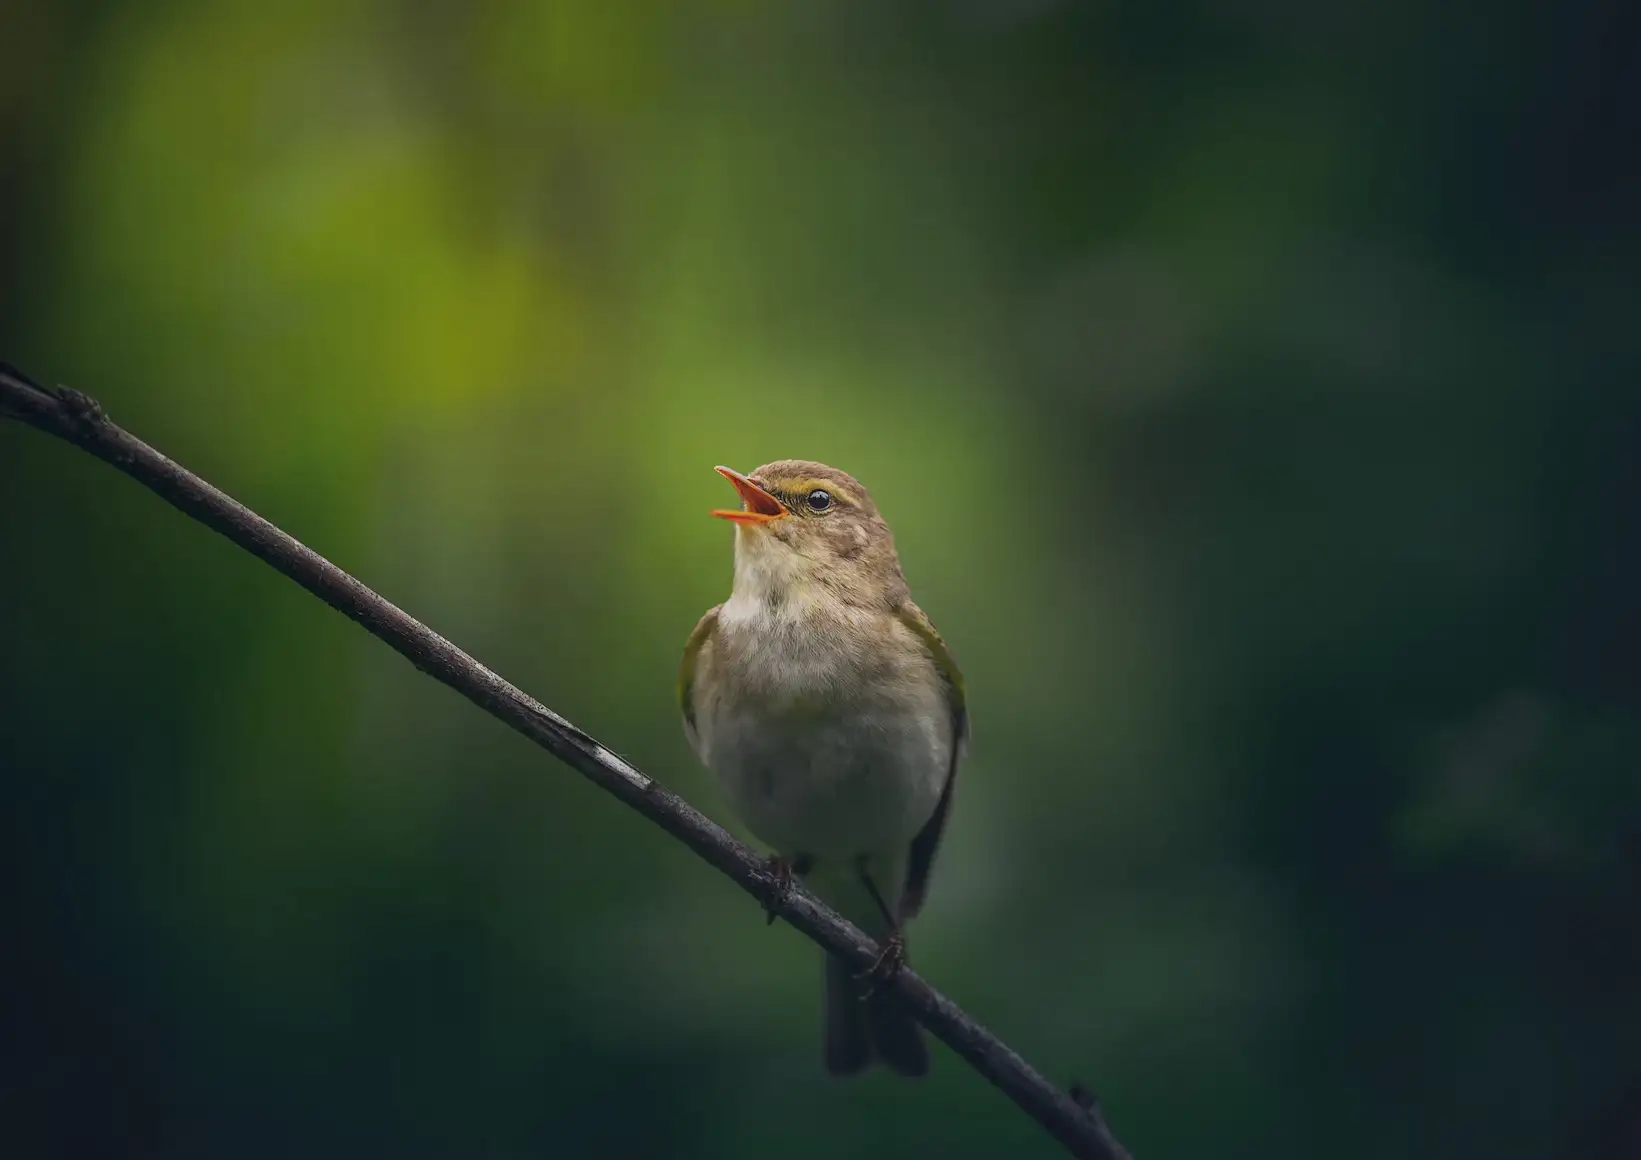 Phylloscopus warbler on branch with beak open, singing